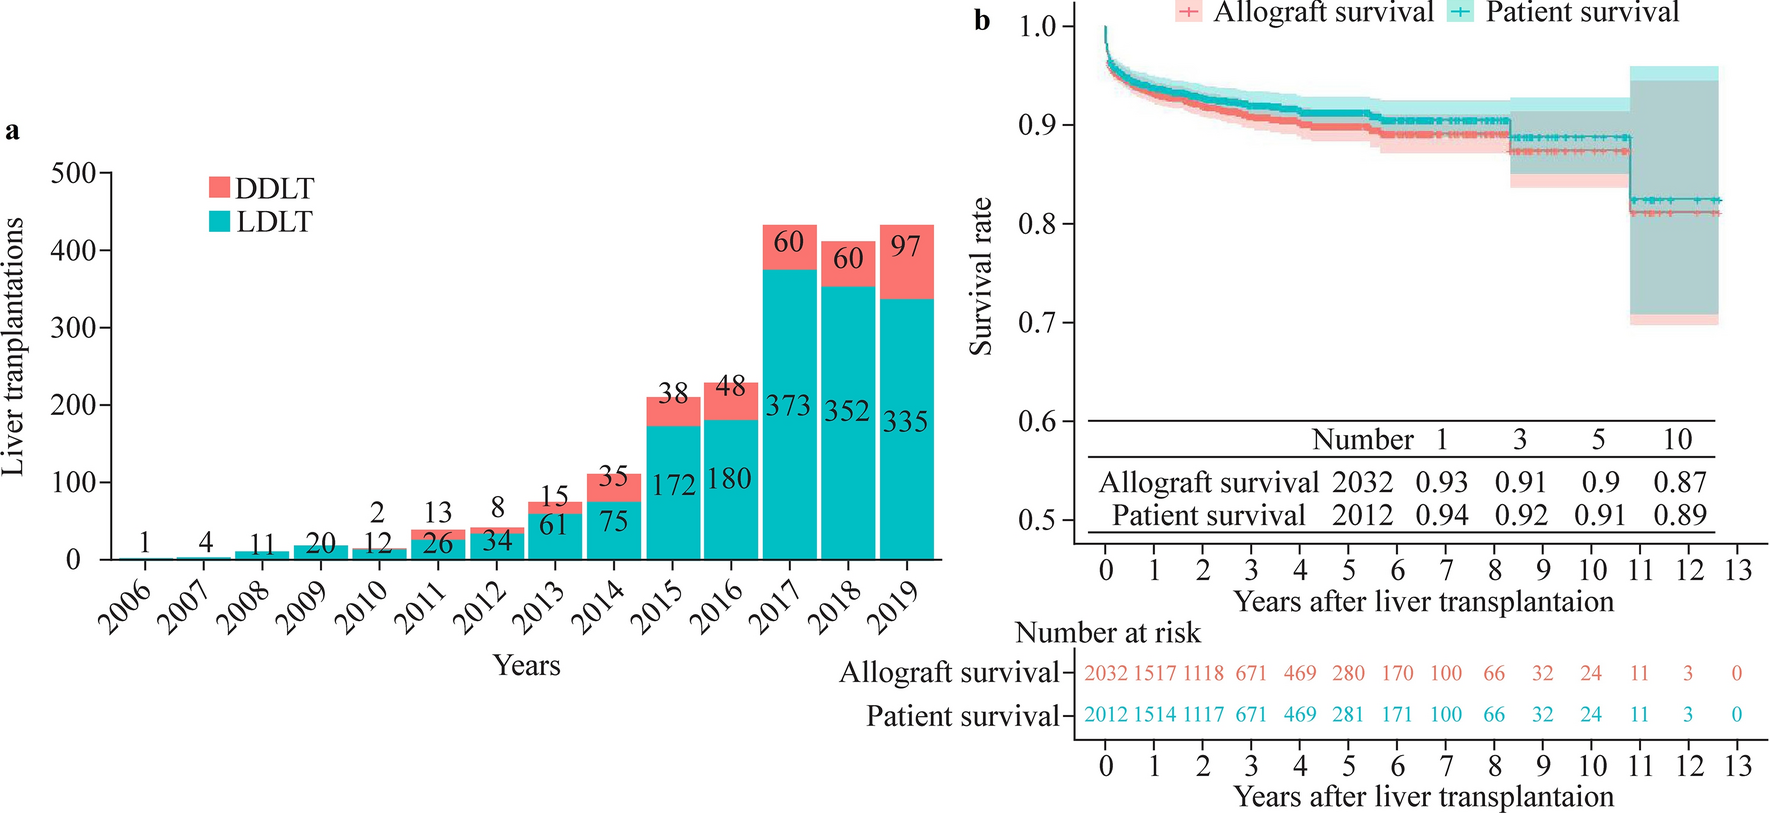 Development and validation of a nomogram to predict allograft survival after pediatric liver transplantation